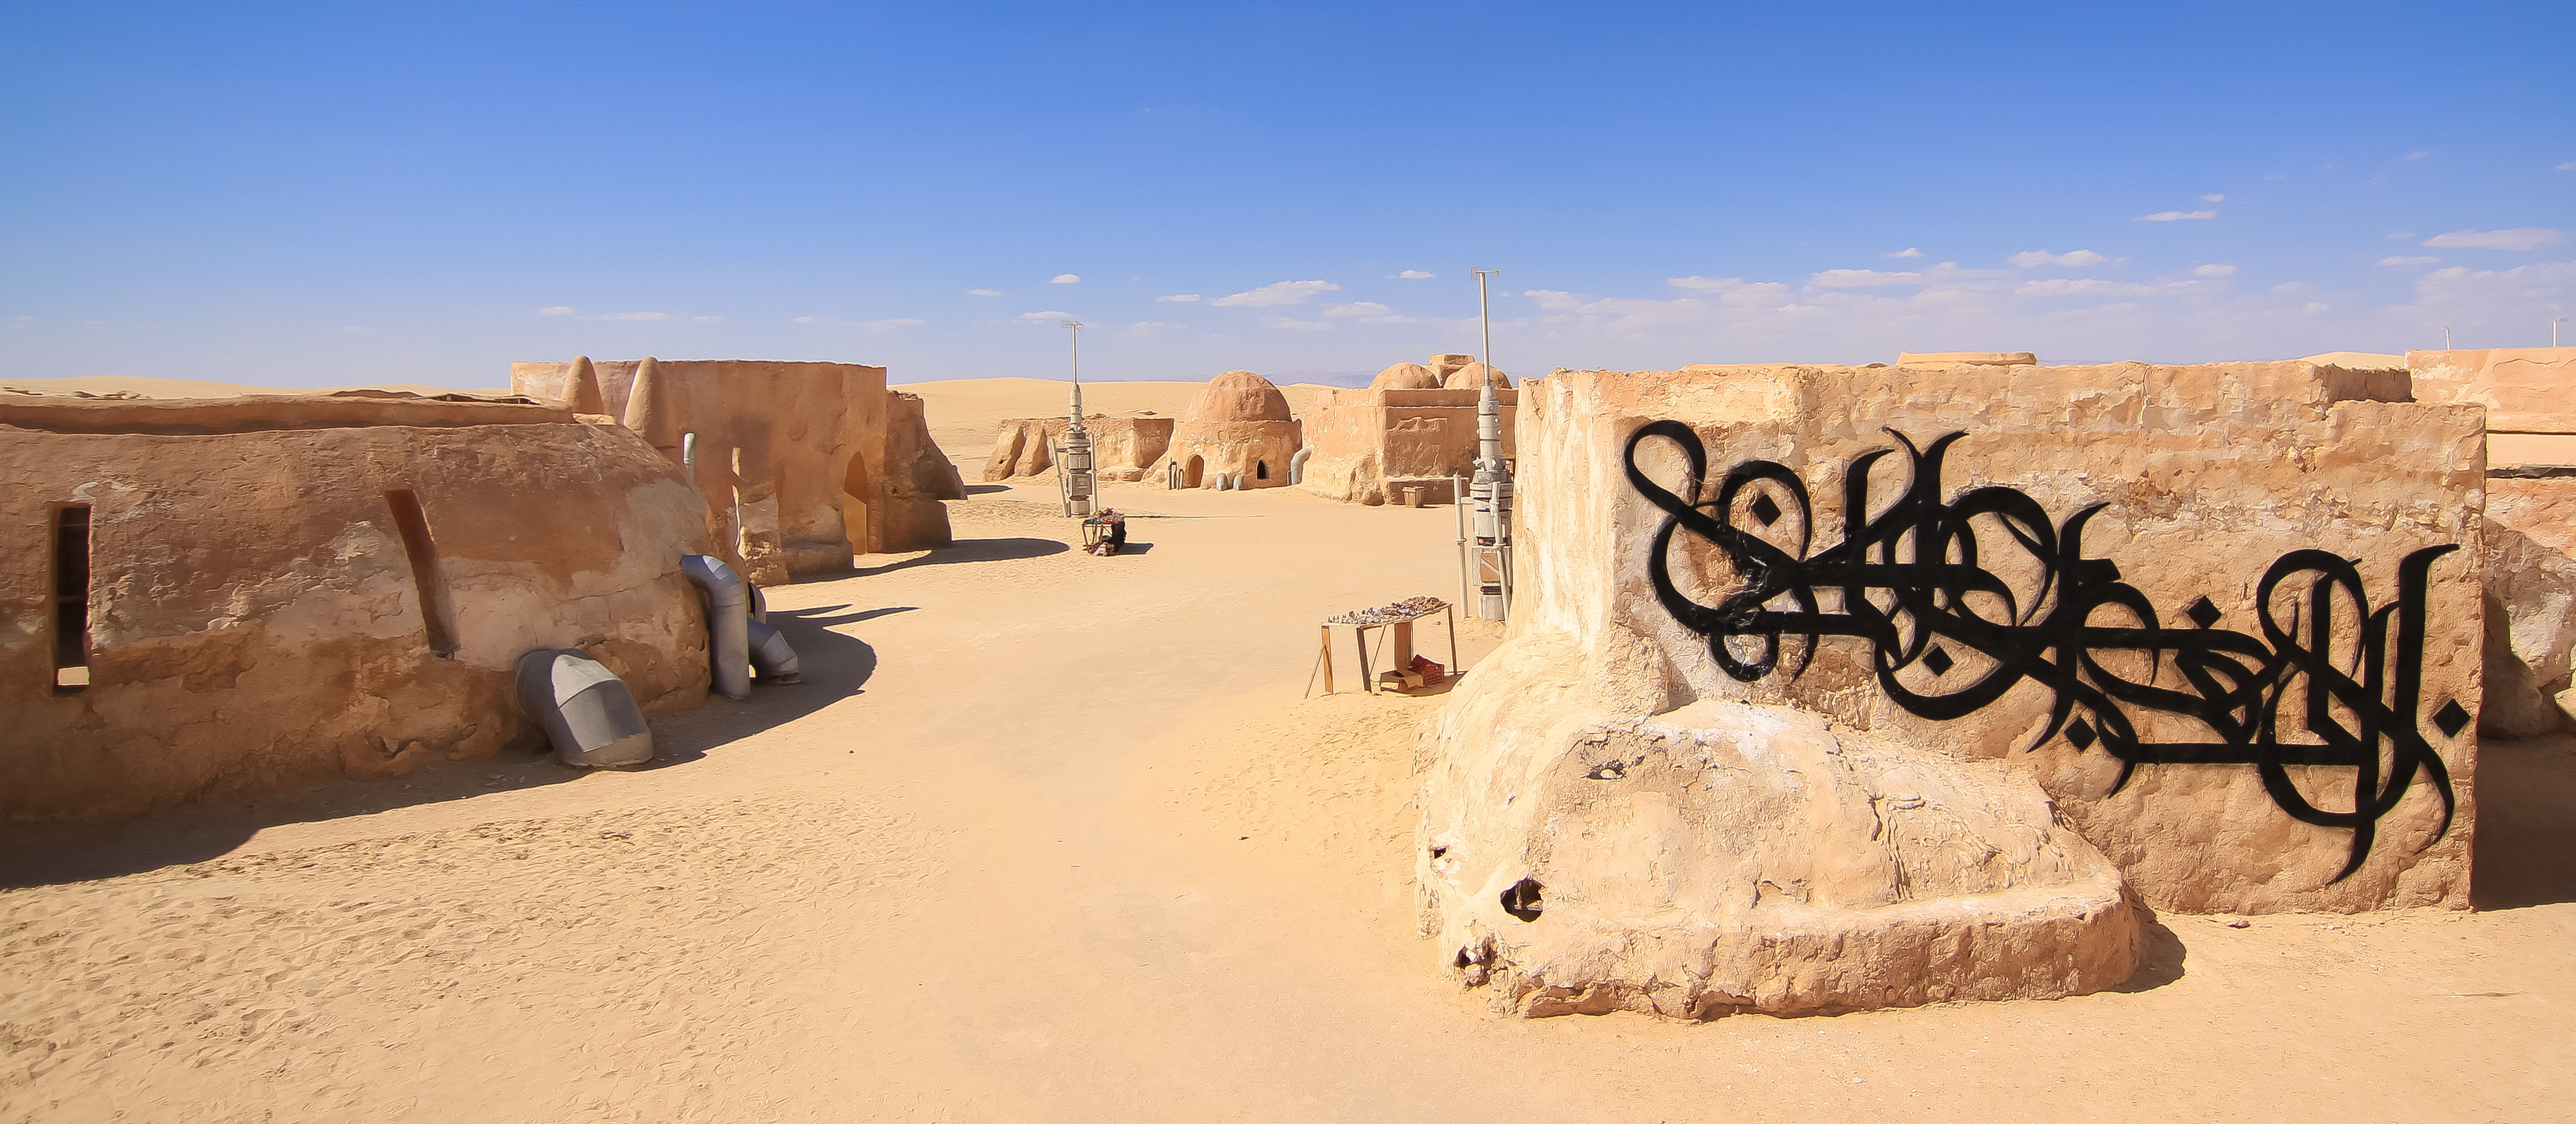 Street artist eL Seed's Lost Wall on the Star Wars film set in Onk el Jmel, Tunisia.